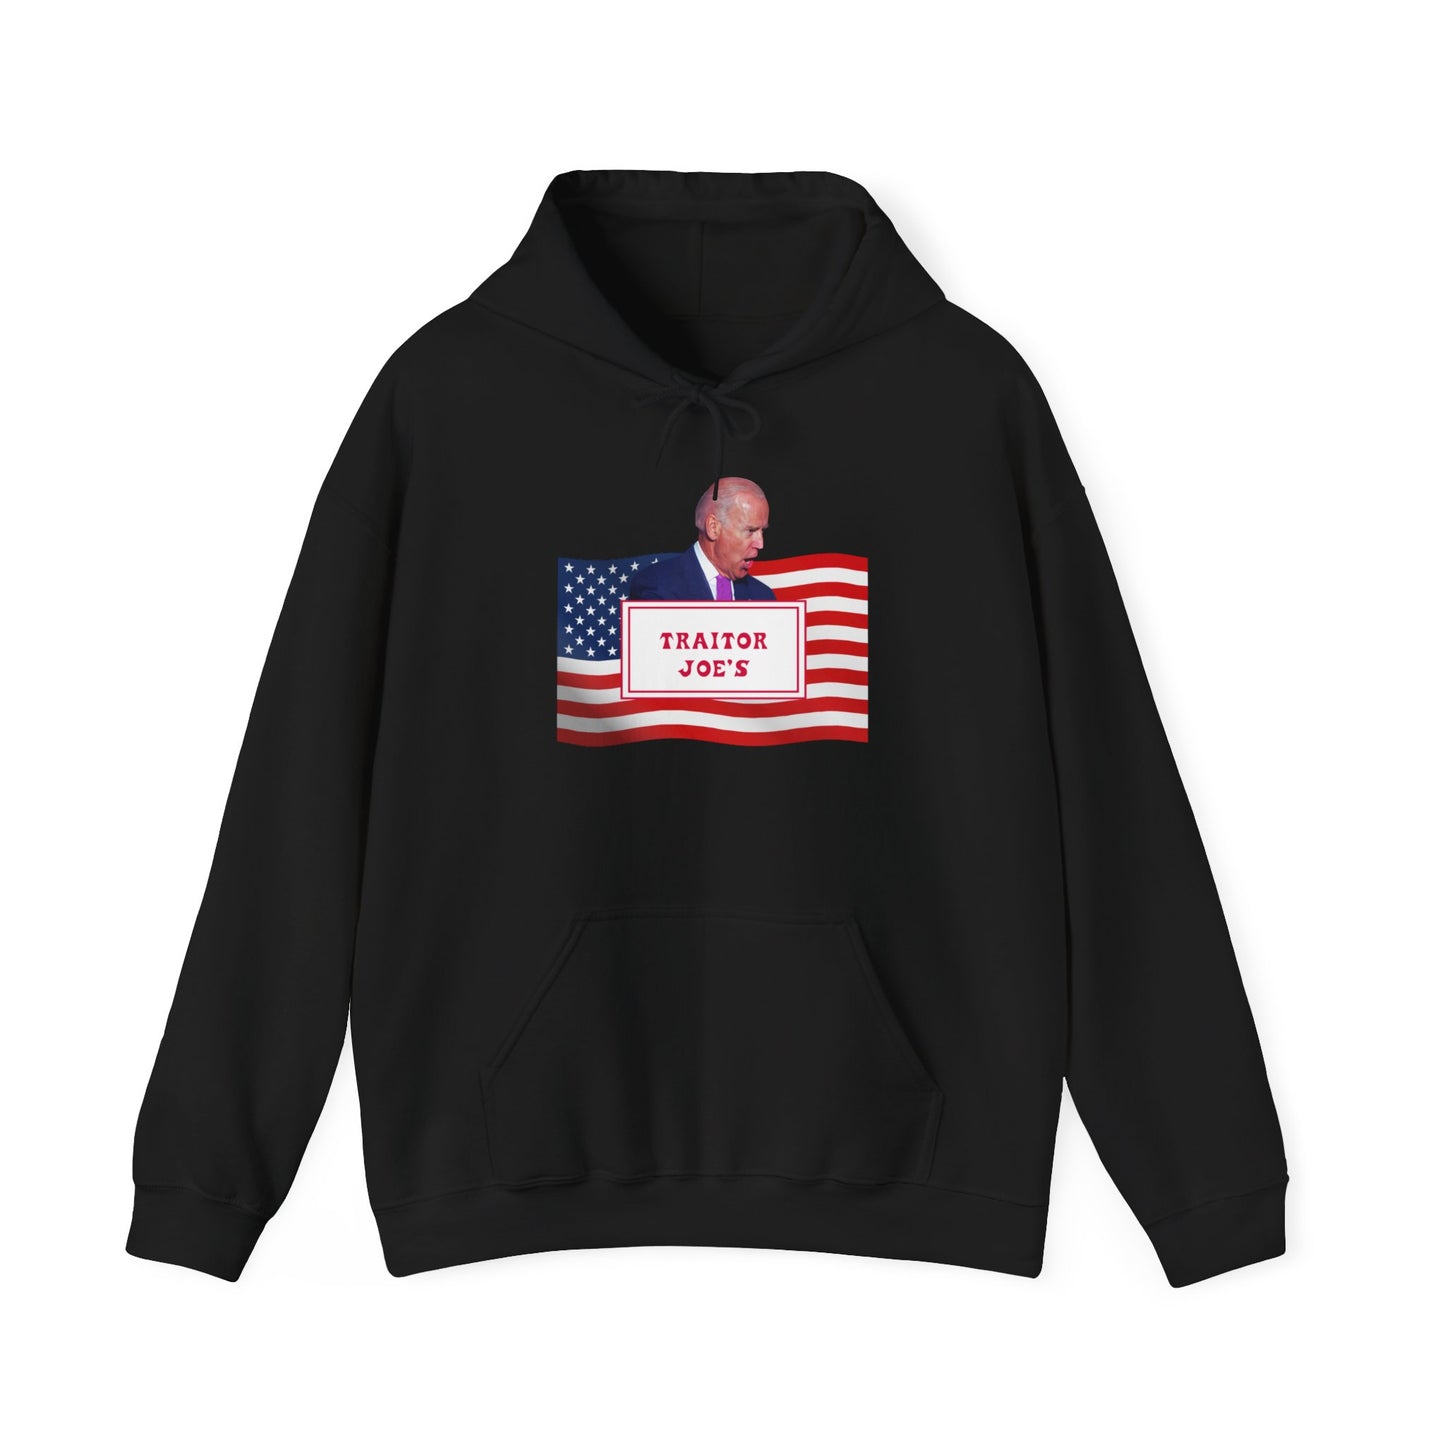 Traitor Joe's Unisex Hoodie Sweatshirt